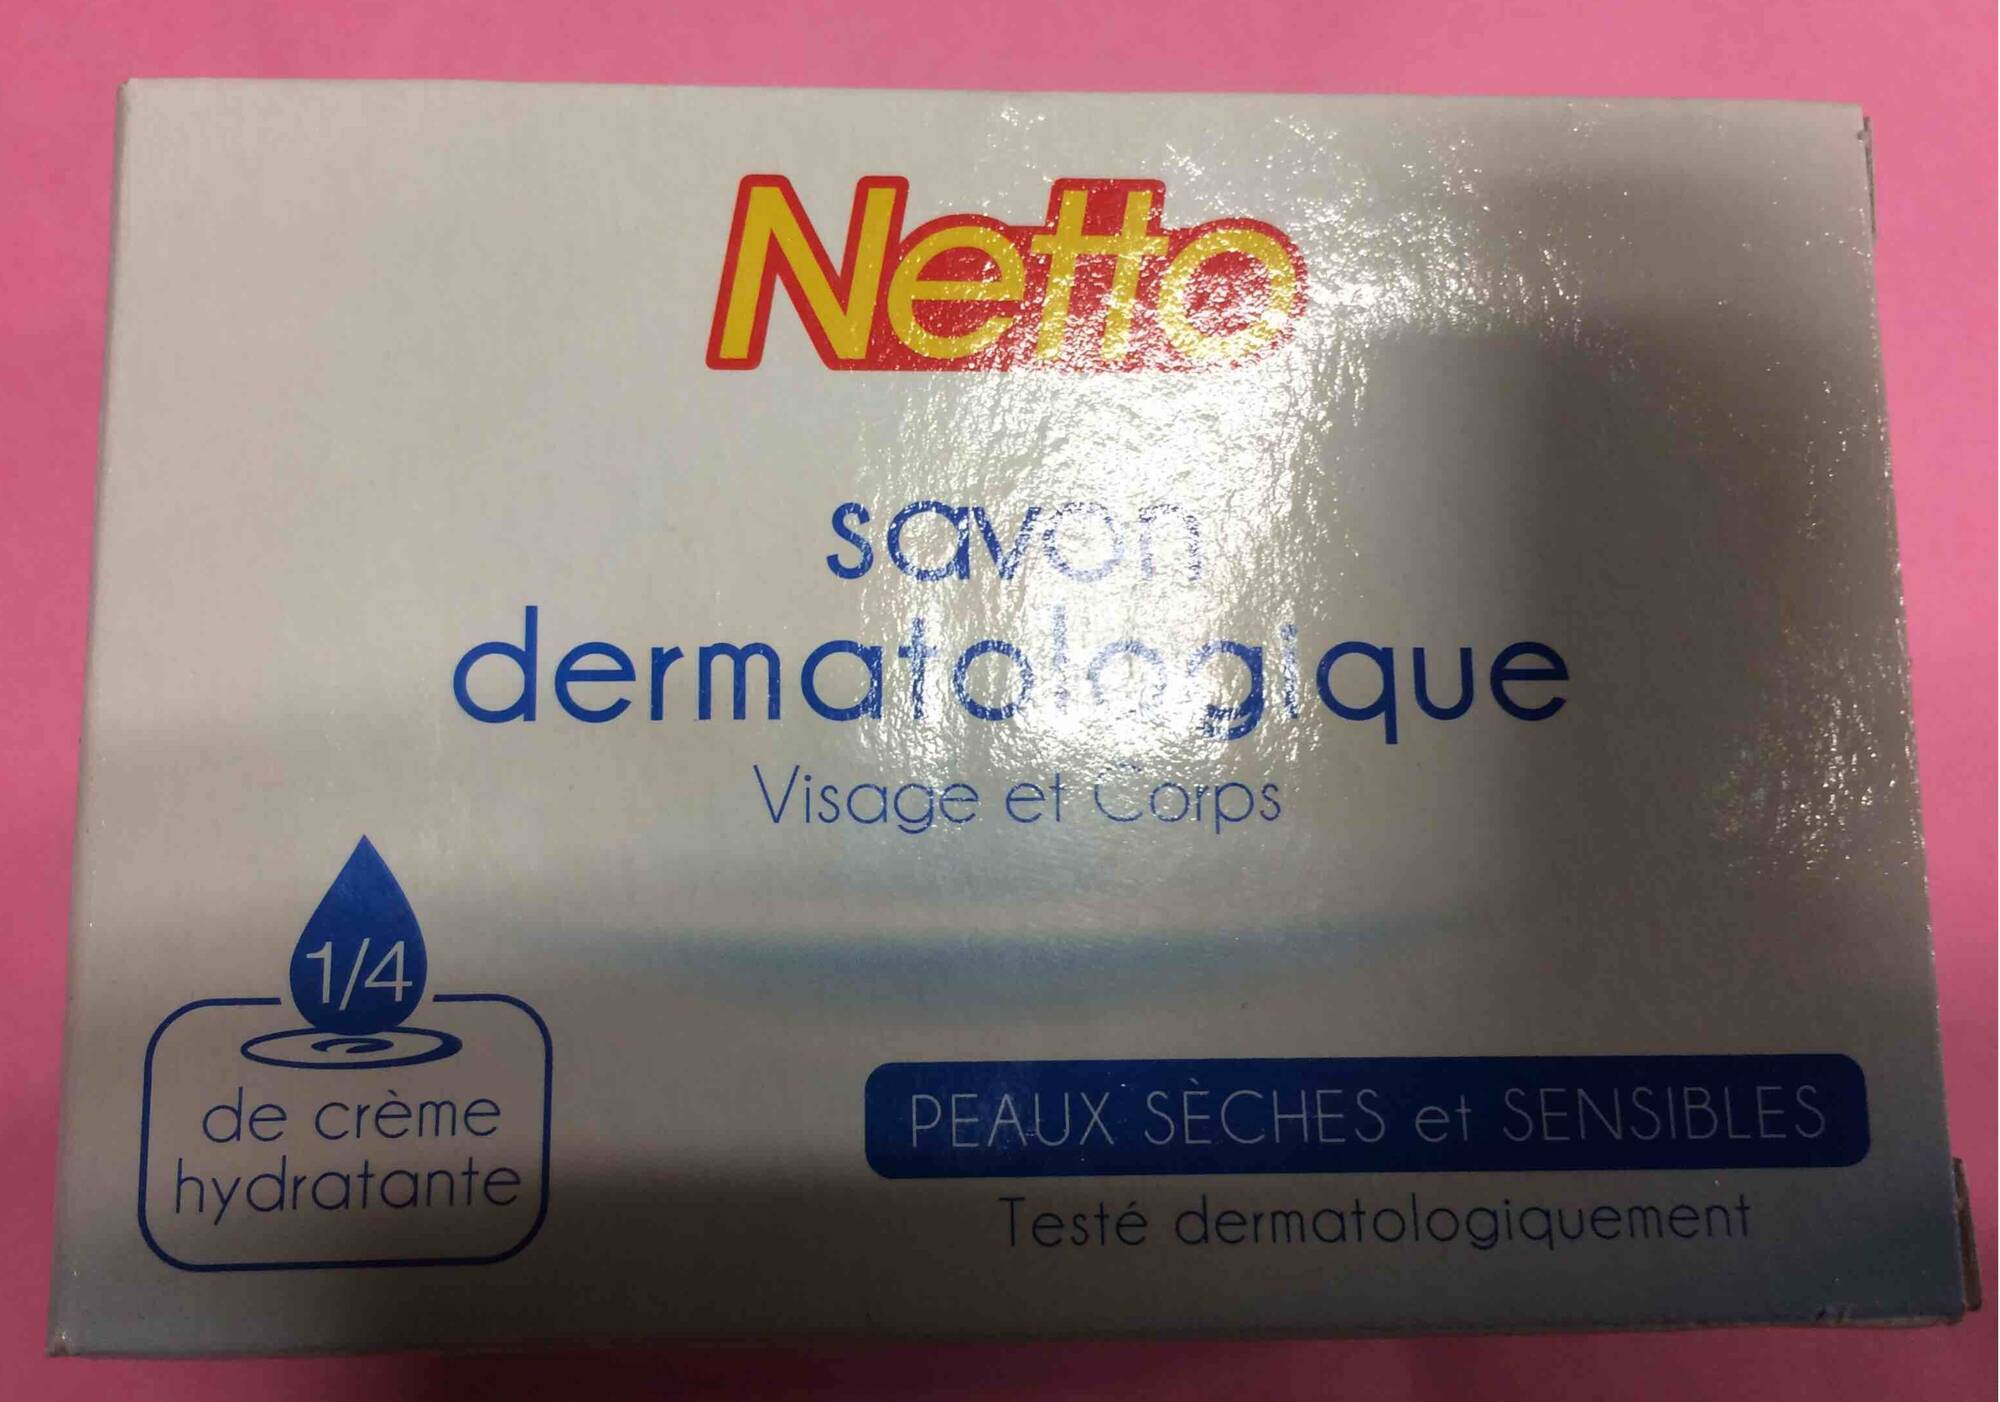 NETTO - Savon dermatologique visage et corps